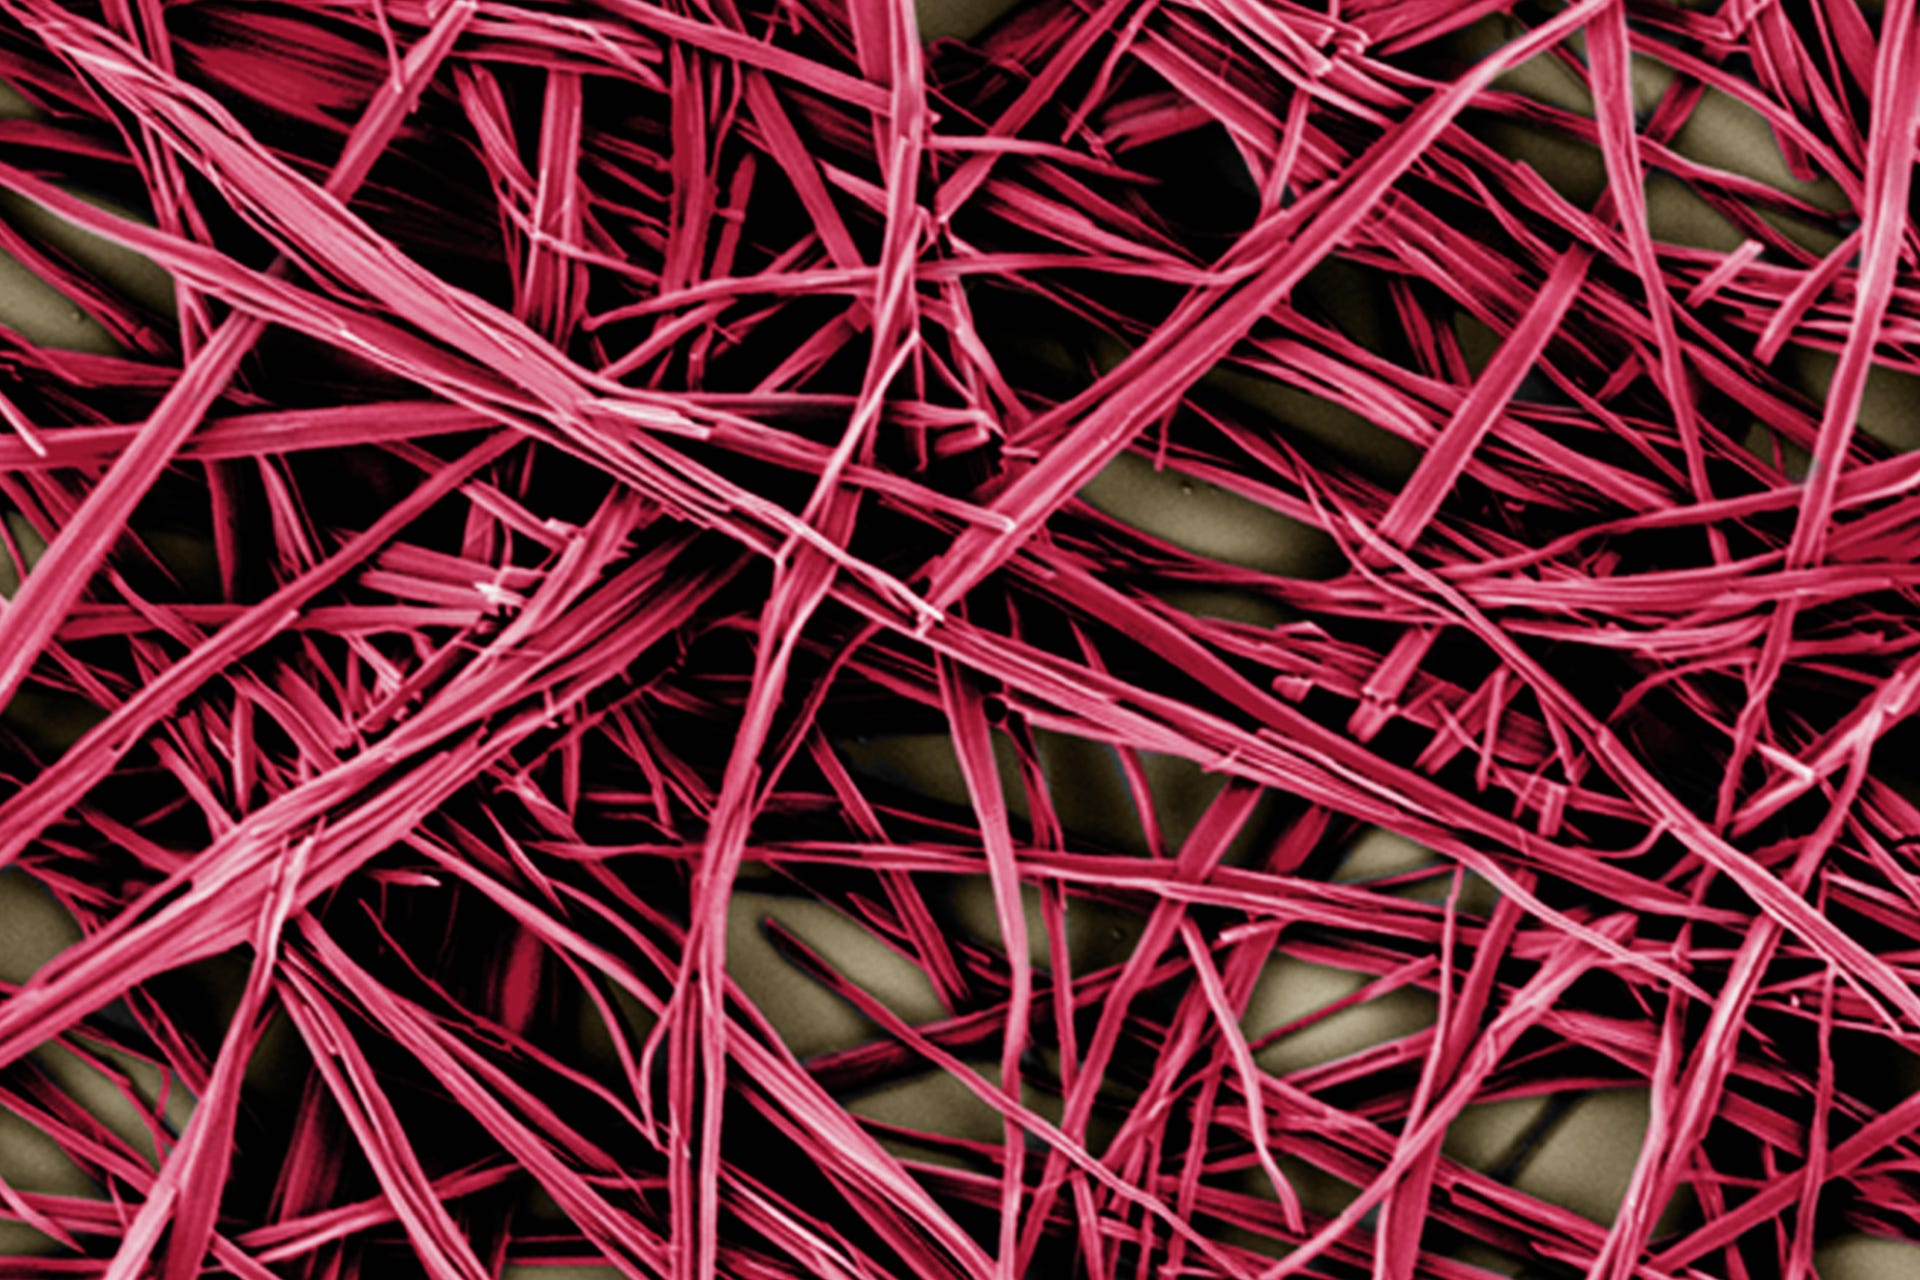 Gentex Nanofibers - up close